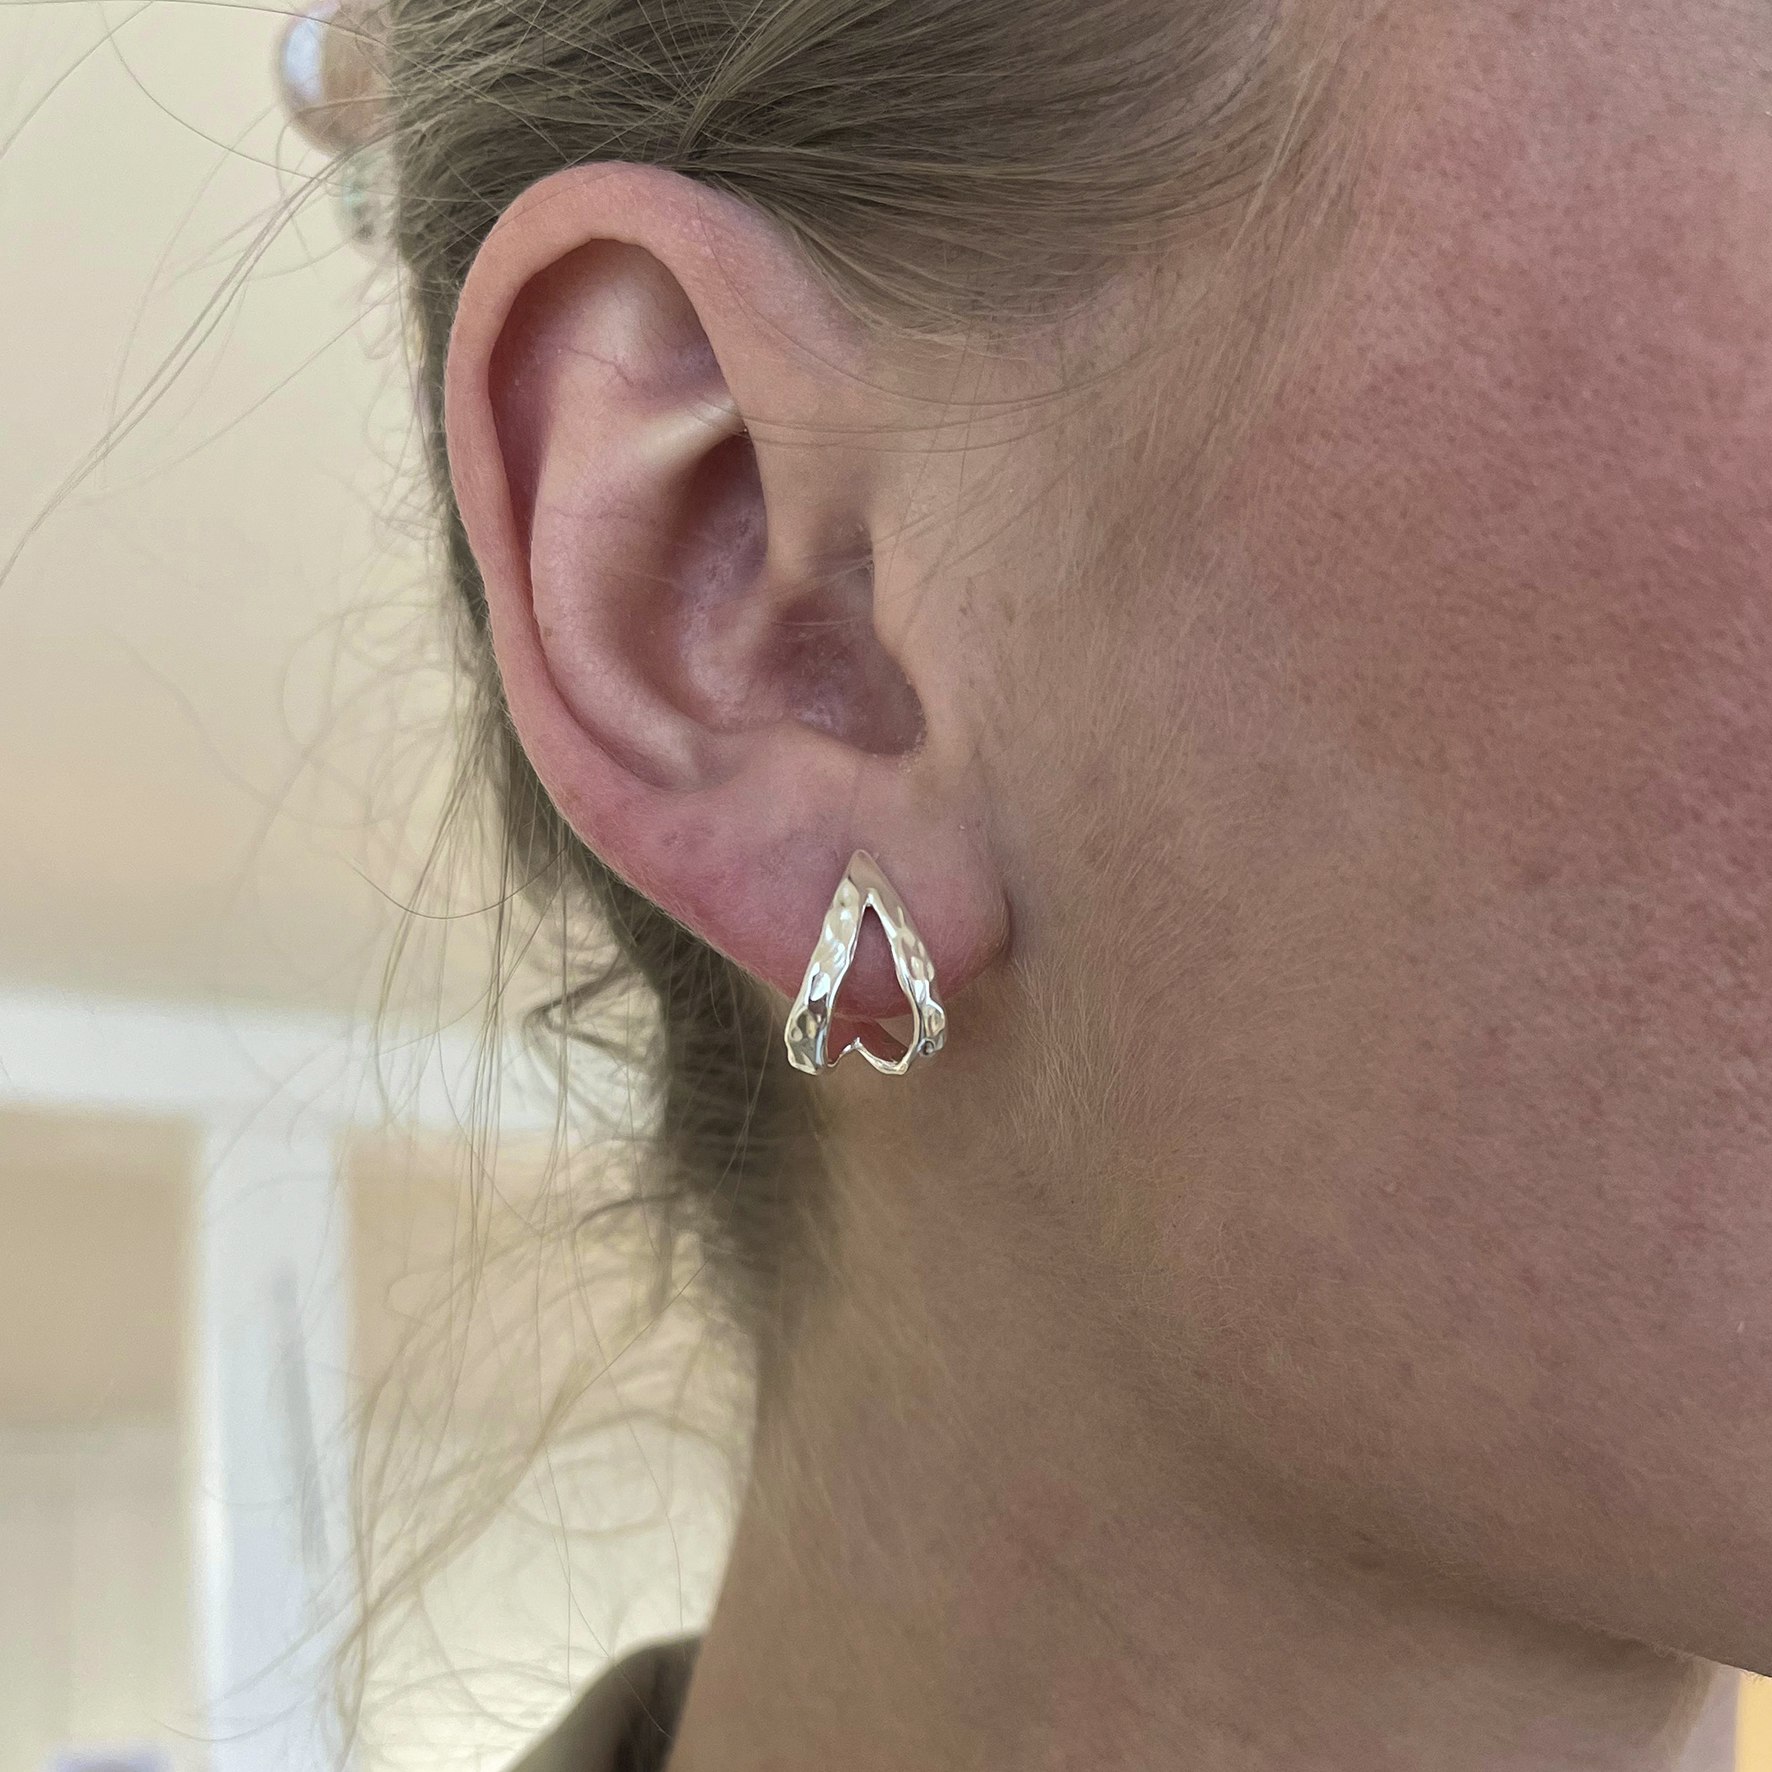 Breakup Earring von Jane Kønig in Silber Sterling 925